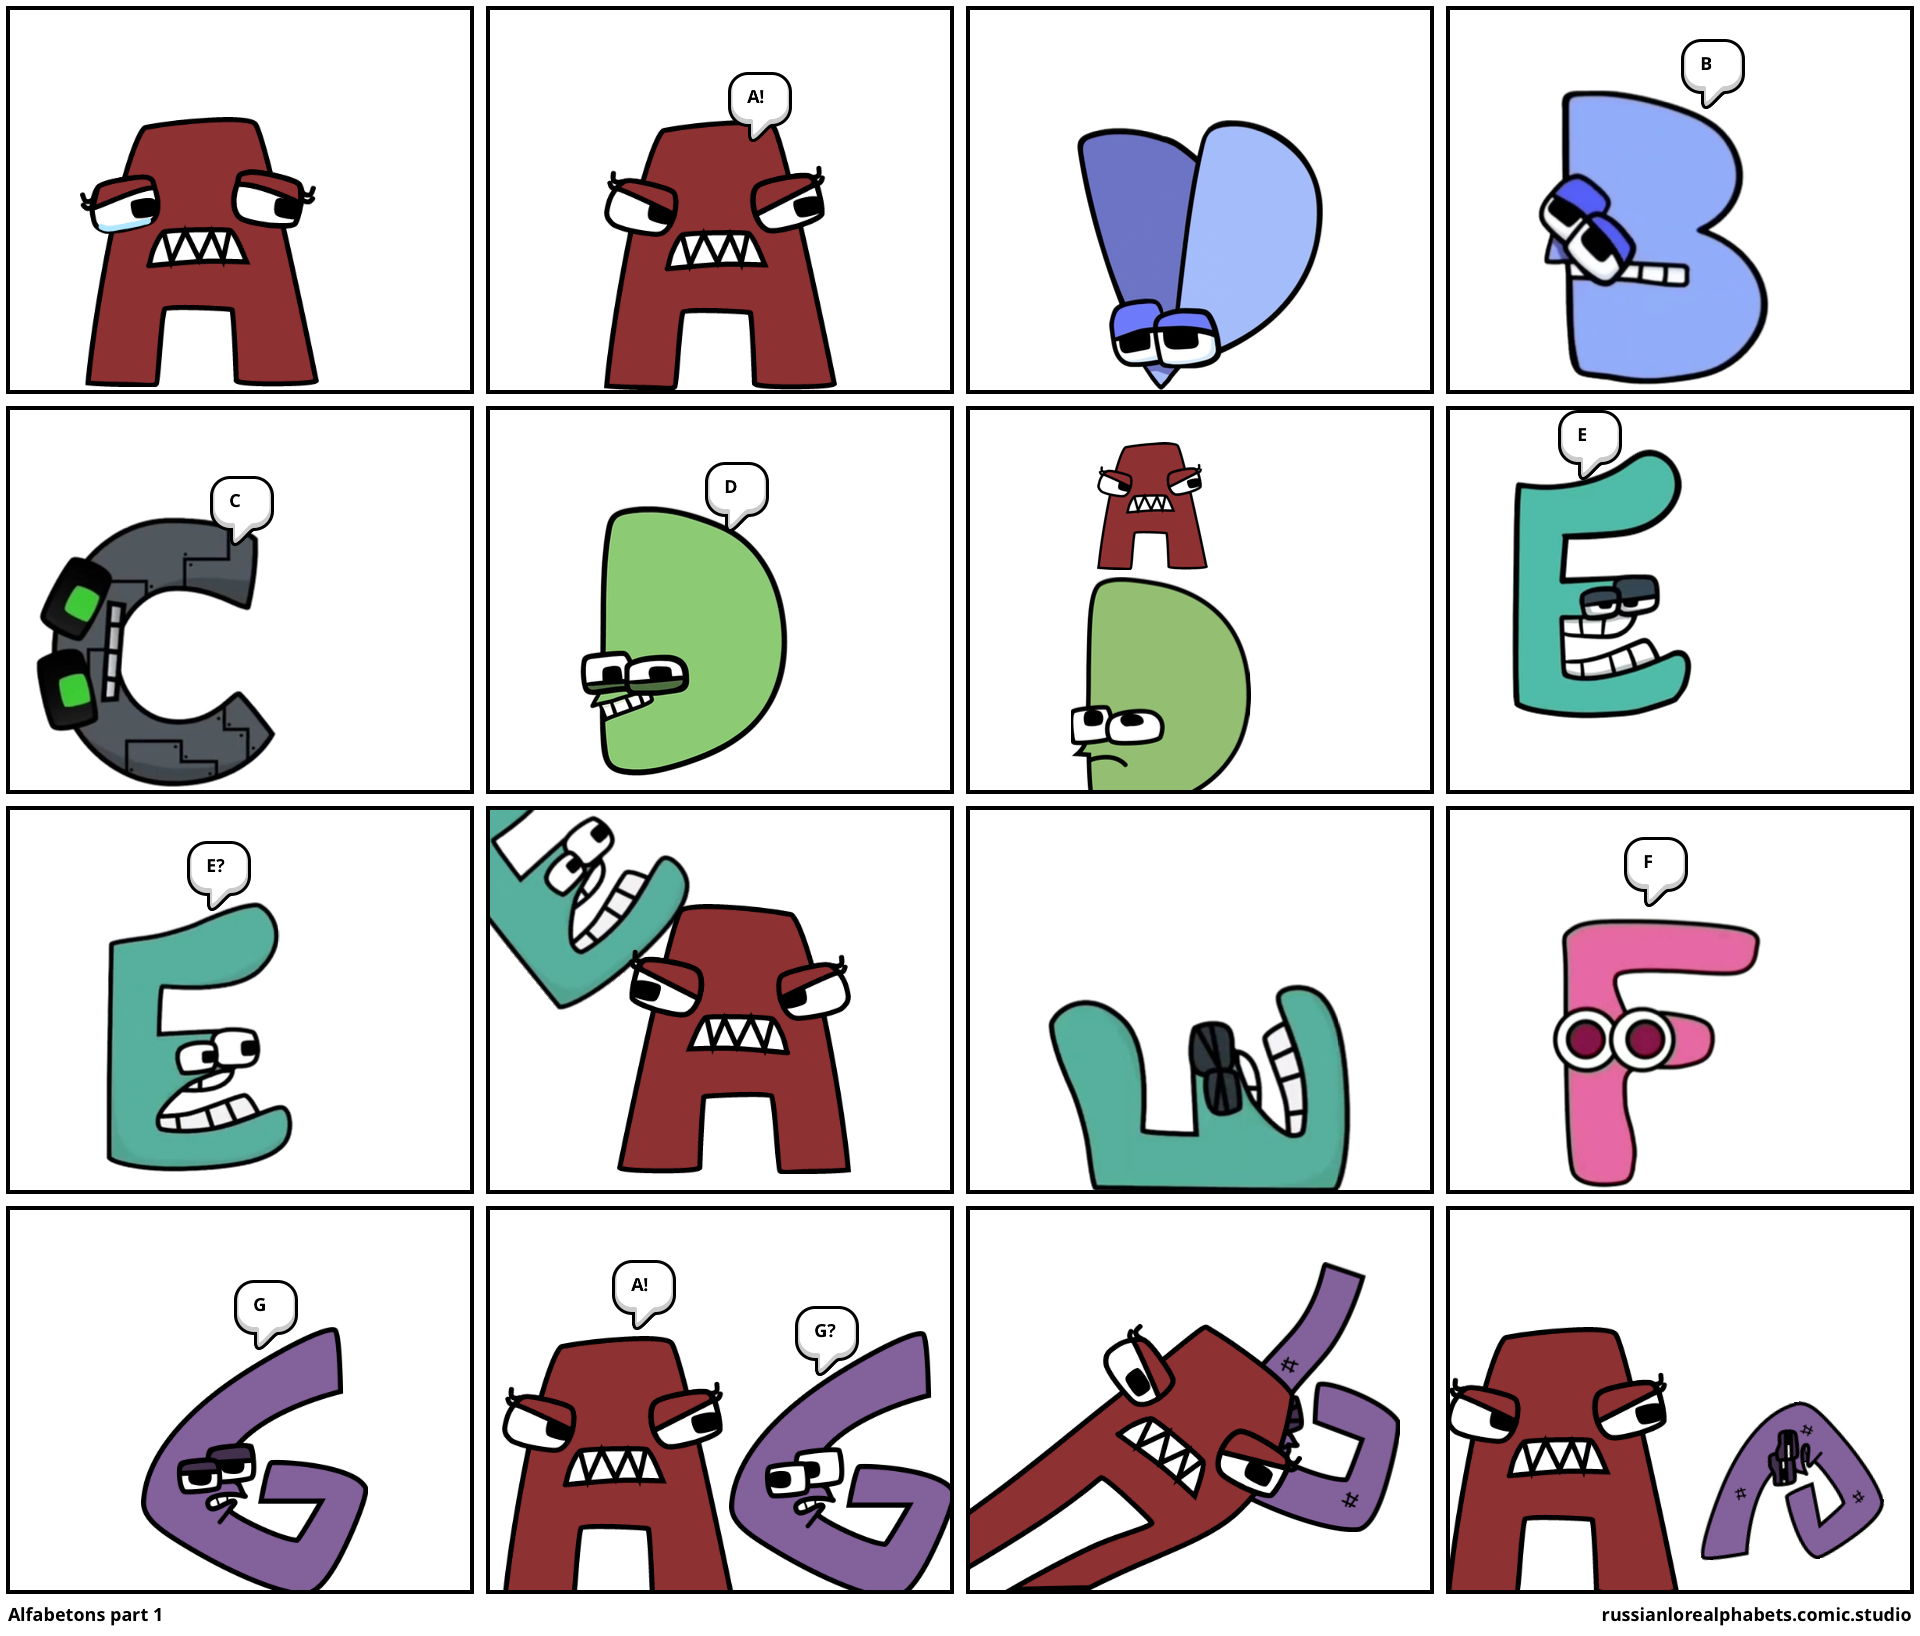 My version of Spanish Alphabet Lore for @bren319 but in bren's style -  TurboWarp